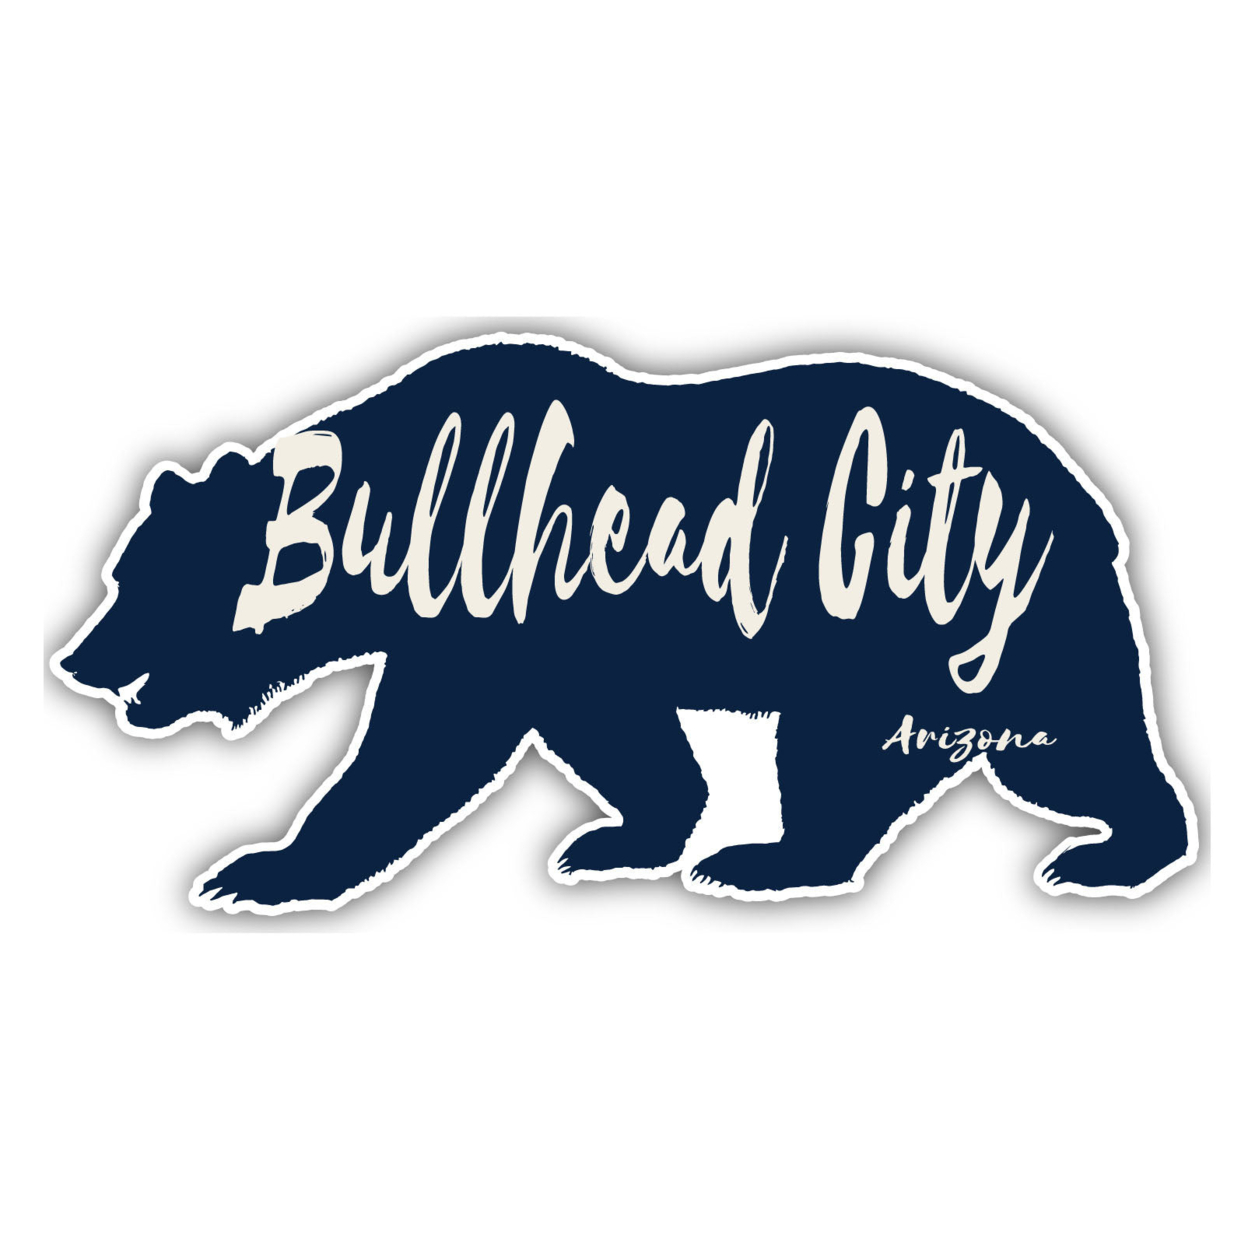 Bullhead City Arizona Souvenir Decorative Stickers (Choose Theme And Size) - 4-Pack, 2-Inch, Bear